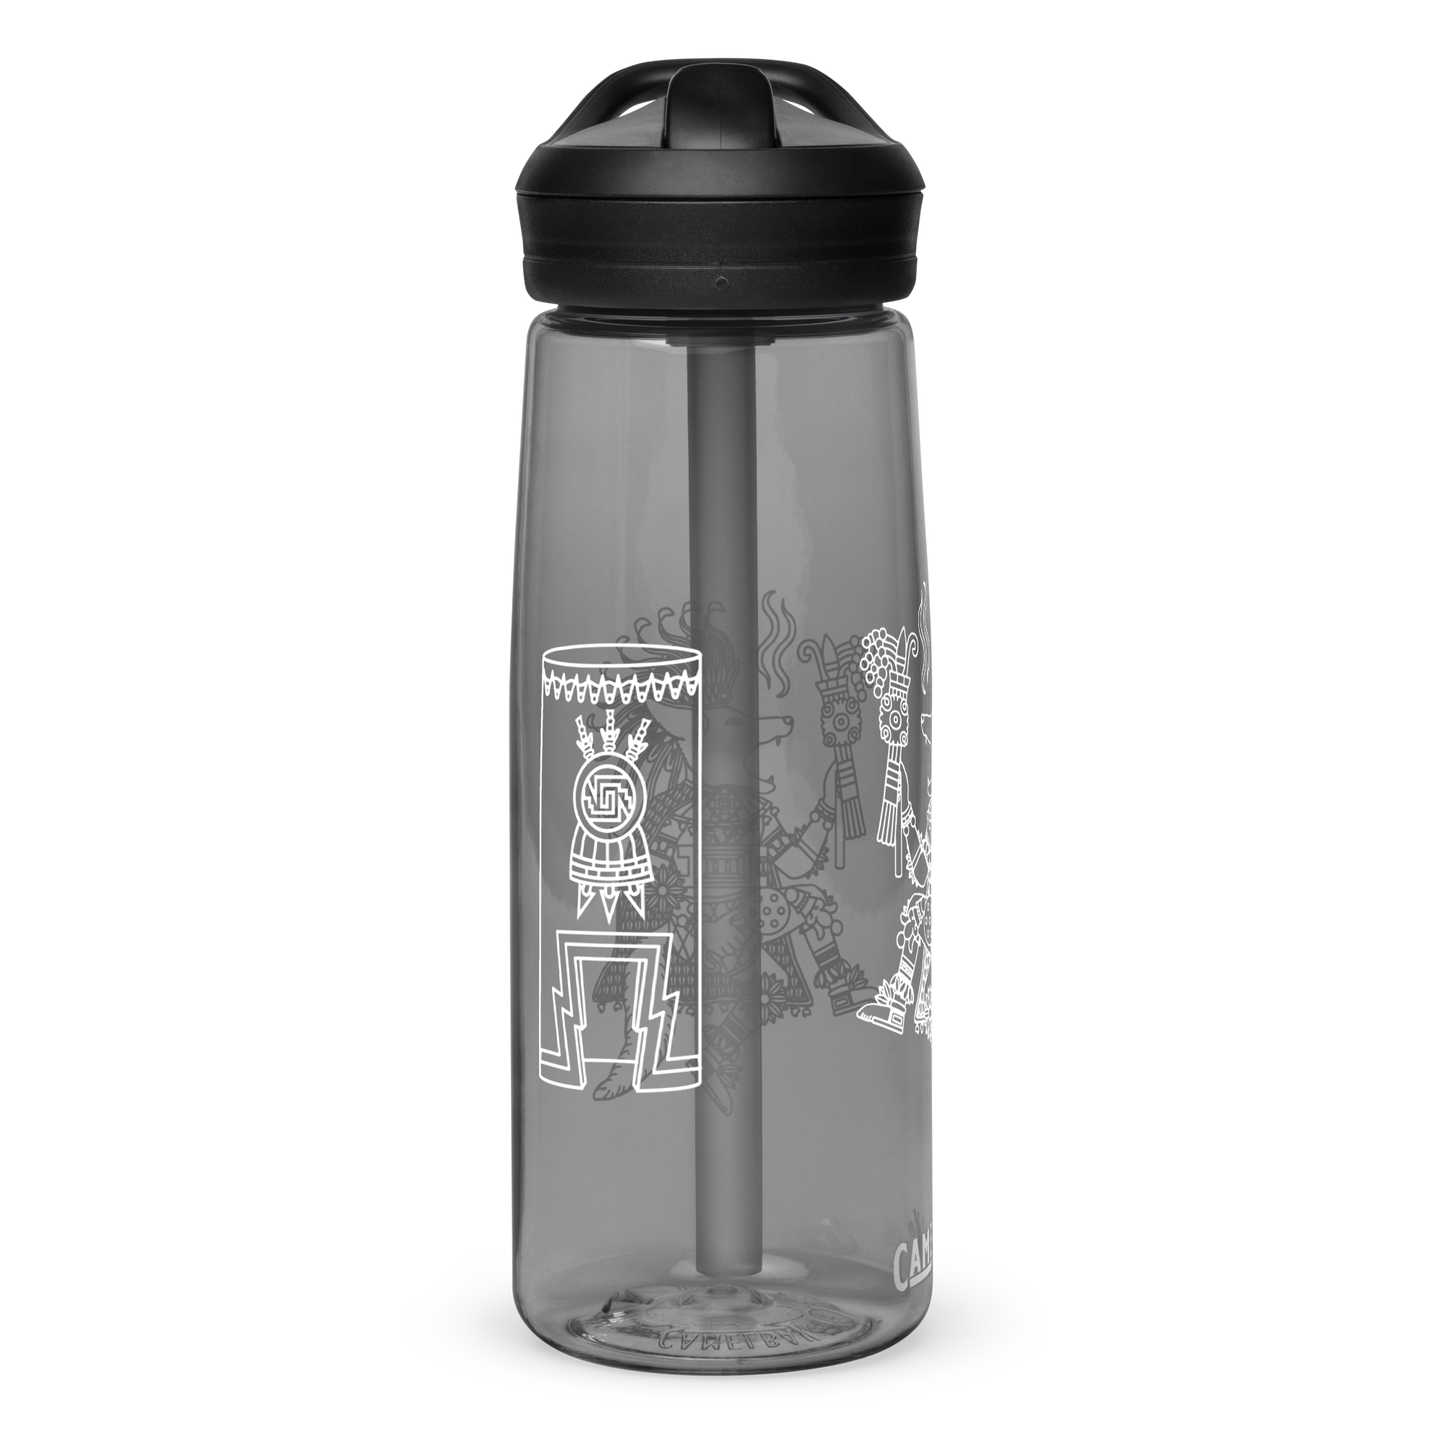 Huehuecoyotl - Camelbak® Sports Water Bottle (2 colors)